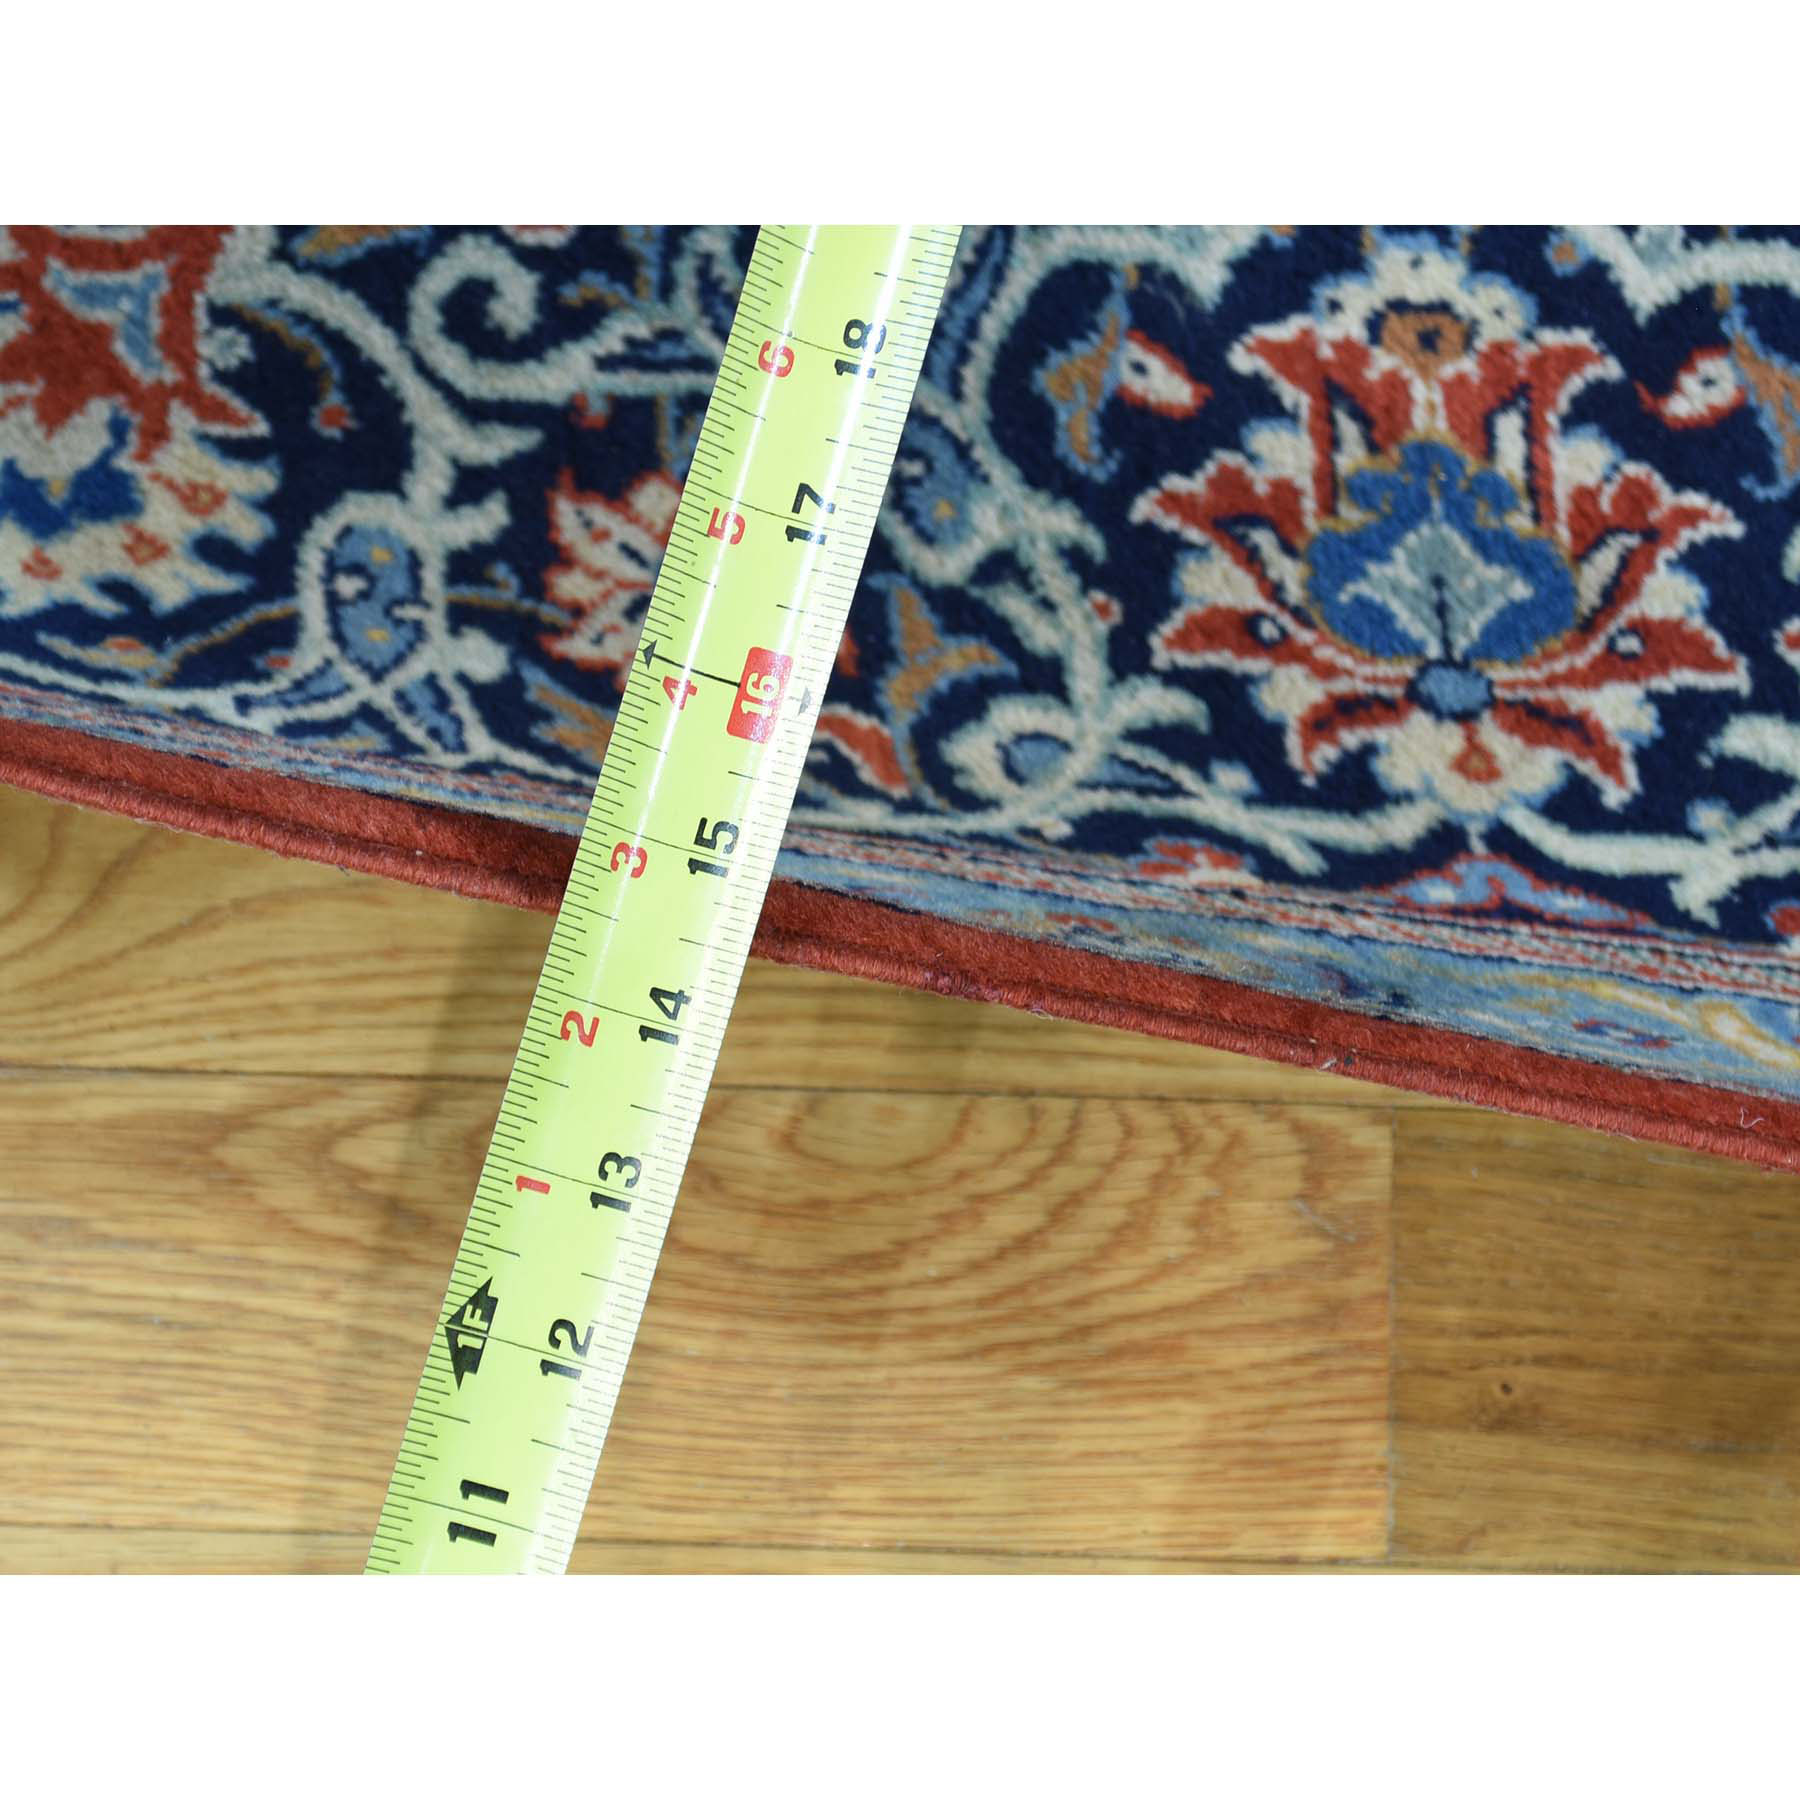 7'10"x11' Hand Woven Antique Persian Kashan Full Pile Oriental Rug 